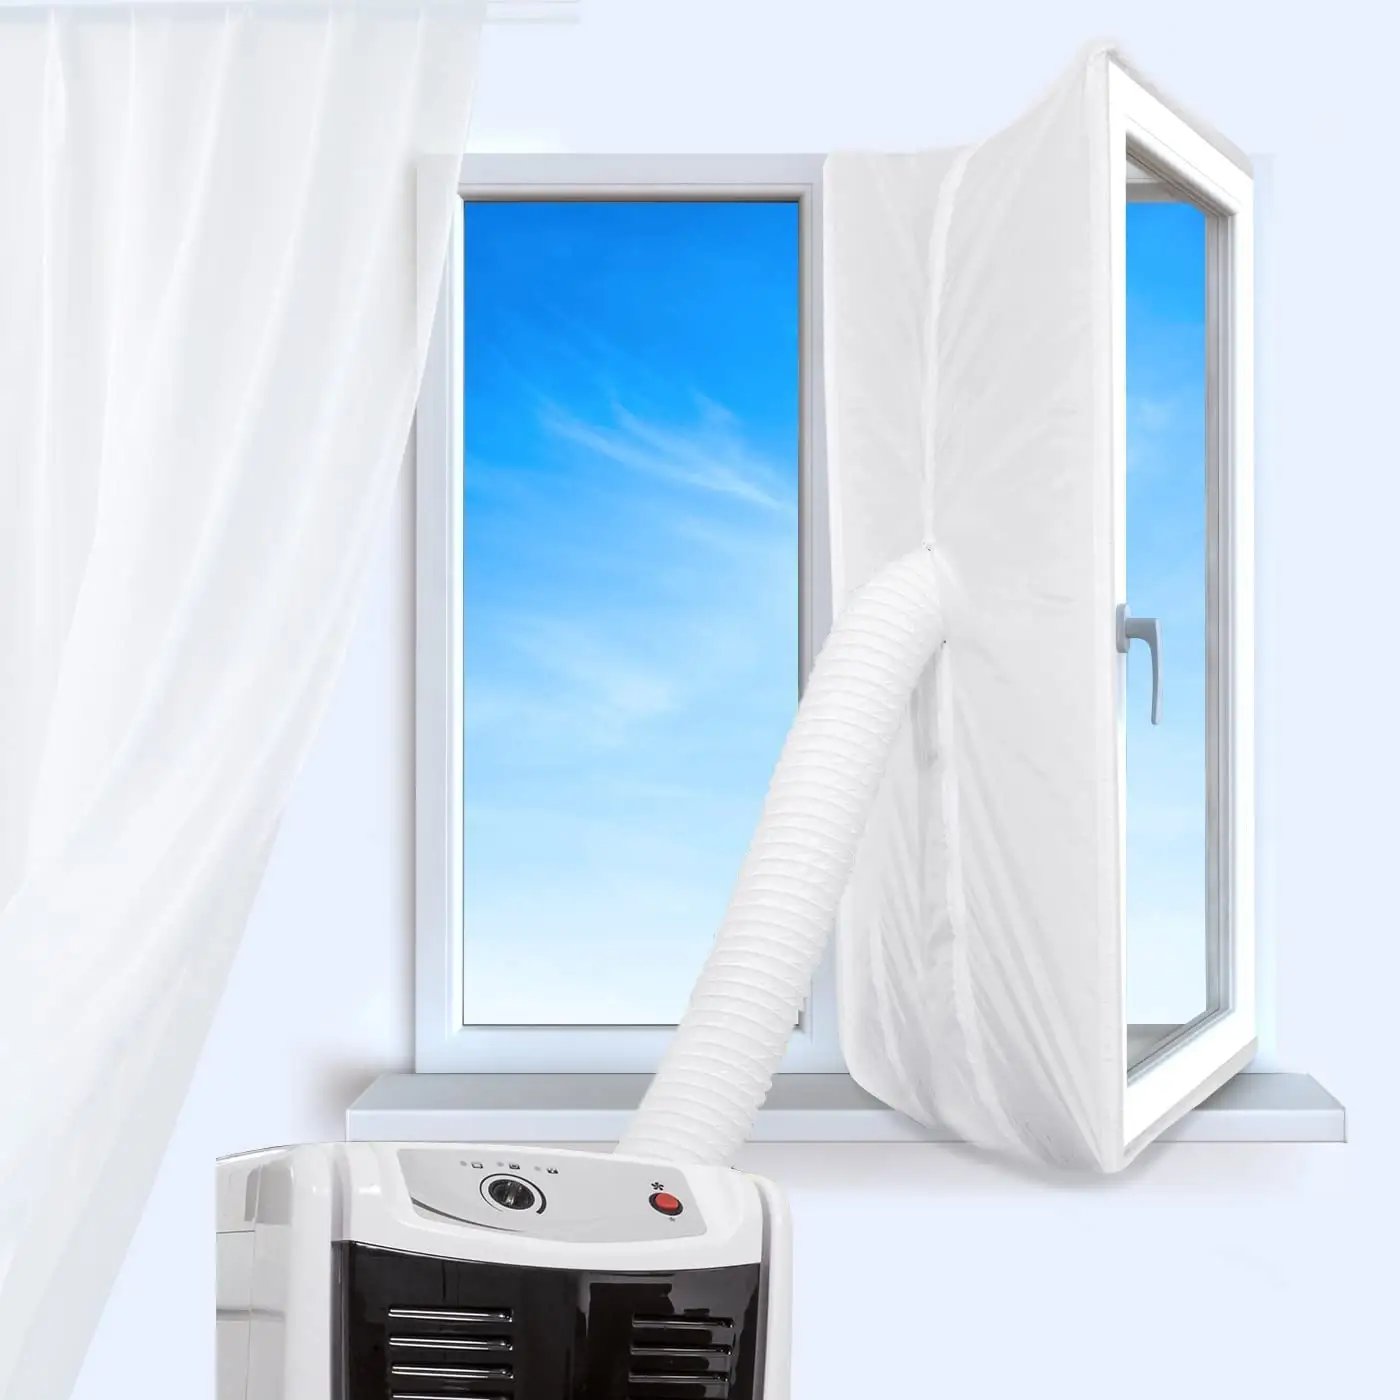 2022 अमेज़न गर्म बिक्री पोर्टेबल एसी खिड़की सील खिड़की सील के लिए एसी यूनिट 400CM/158 इंच गर्म हवा बंद हवा विनिमय गार्ड